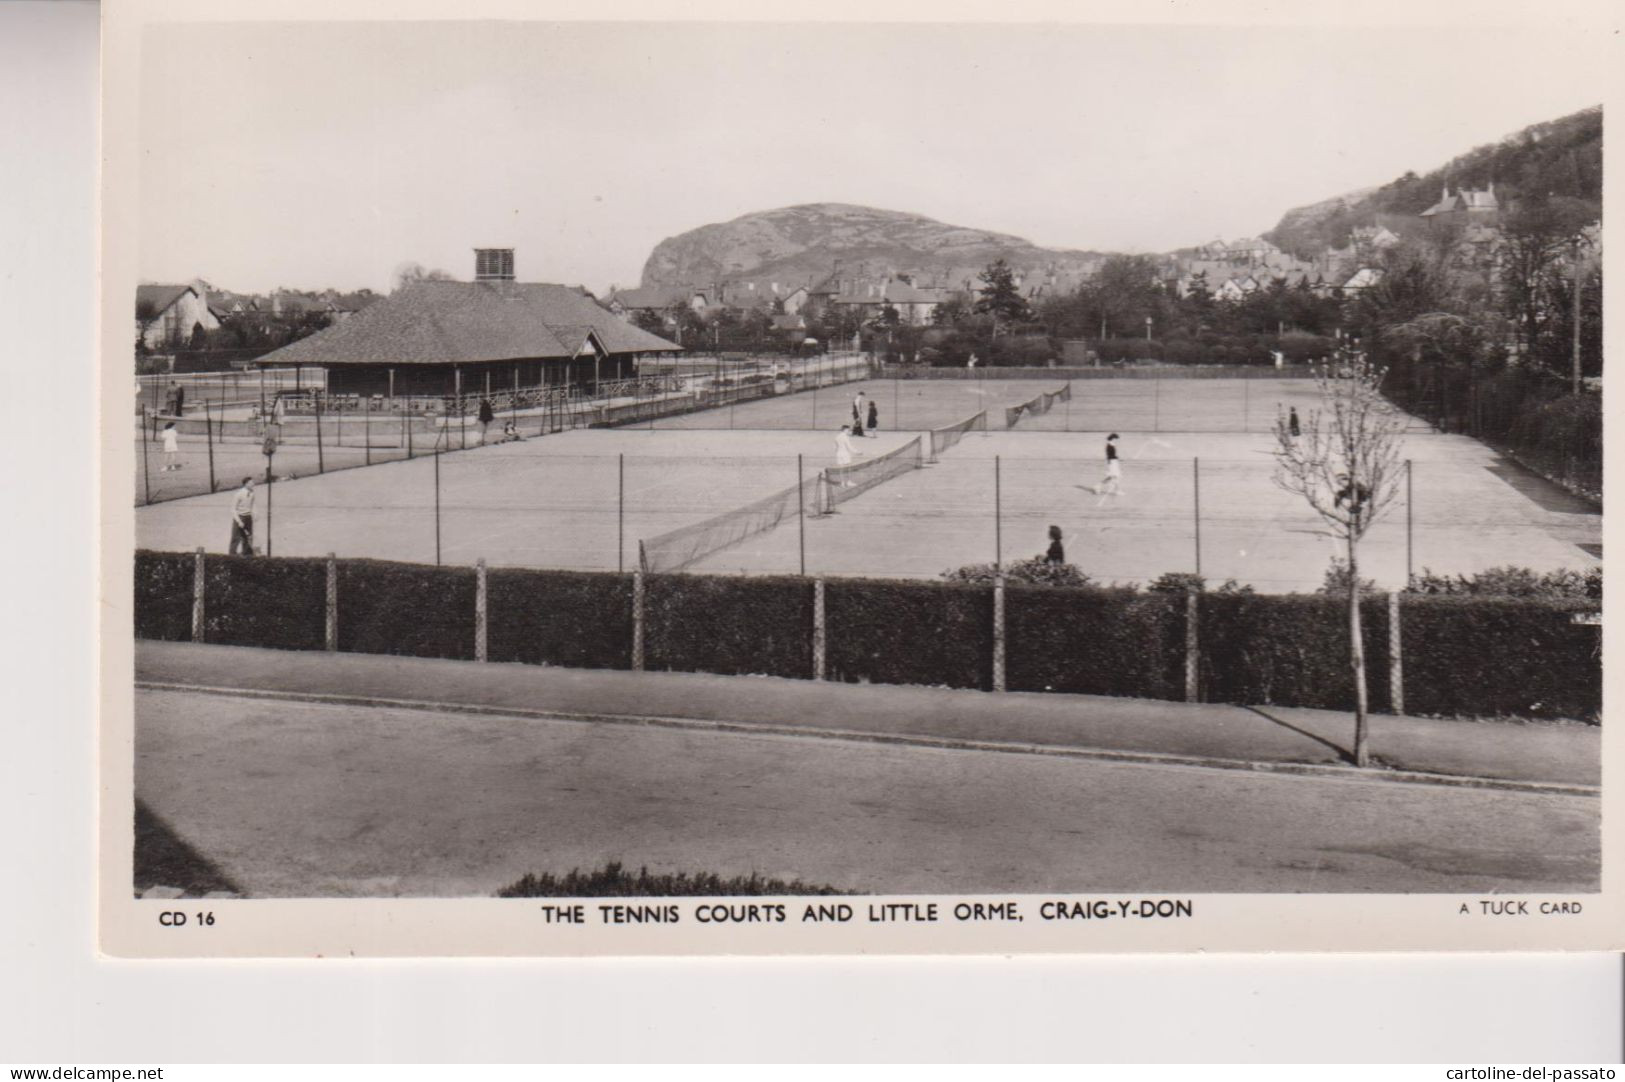 Craig-Y-Don, Llandudno - Tennis Courts And Little Orme - 1950's Tuck Real Photo Postcard - Caernarvonshire